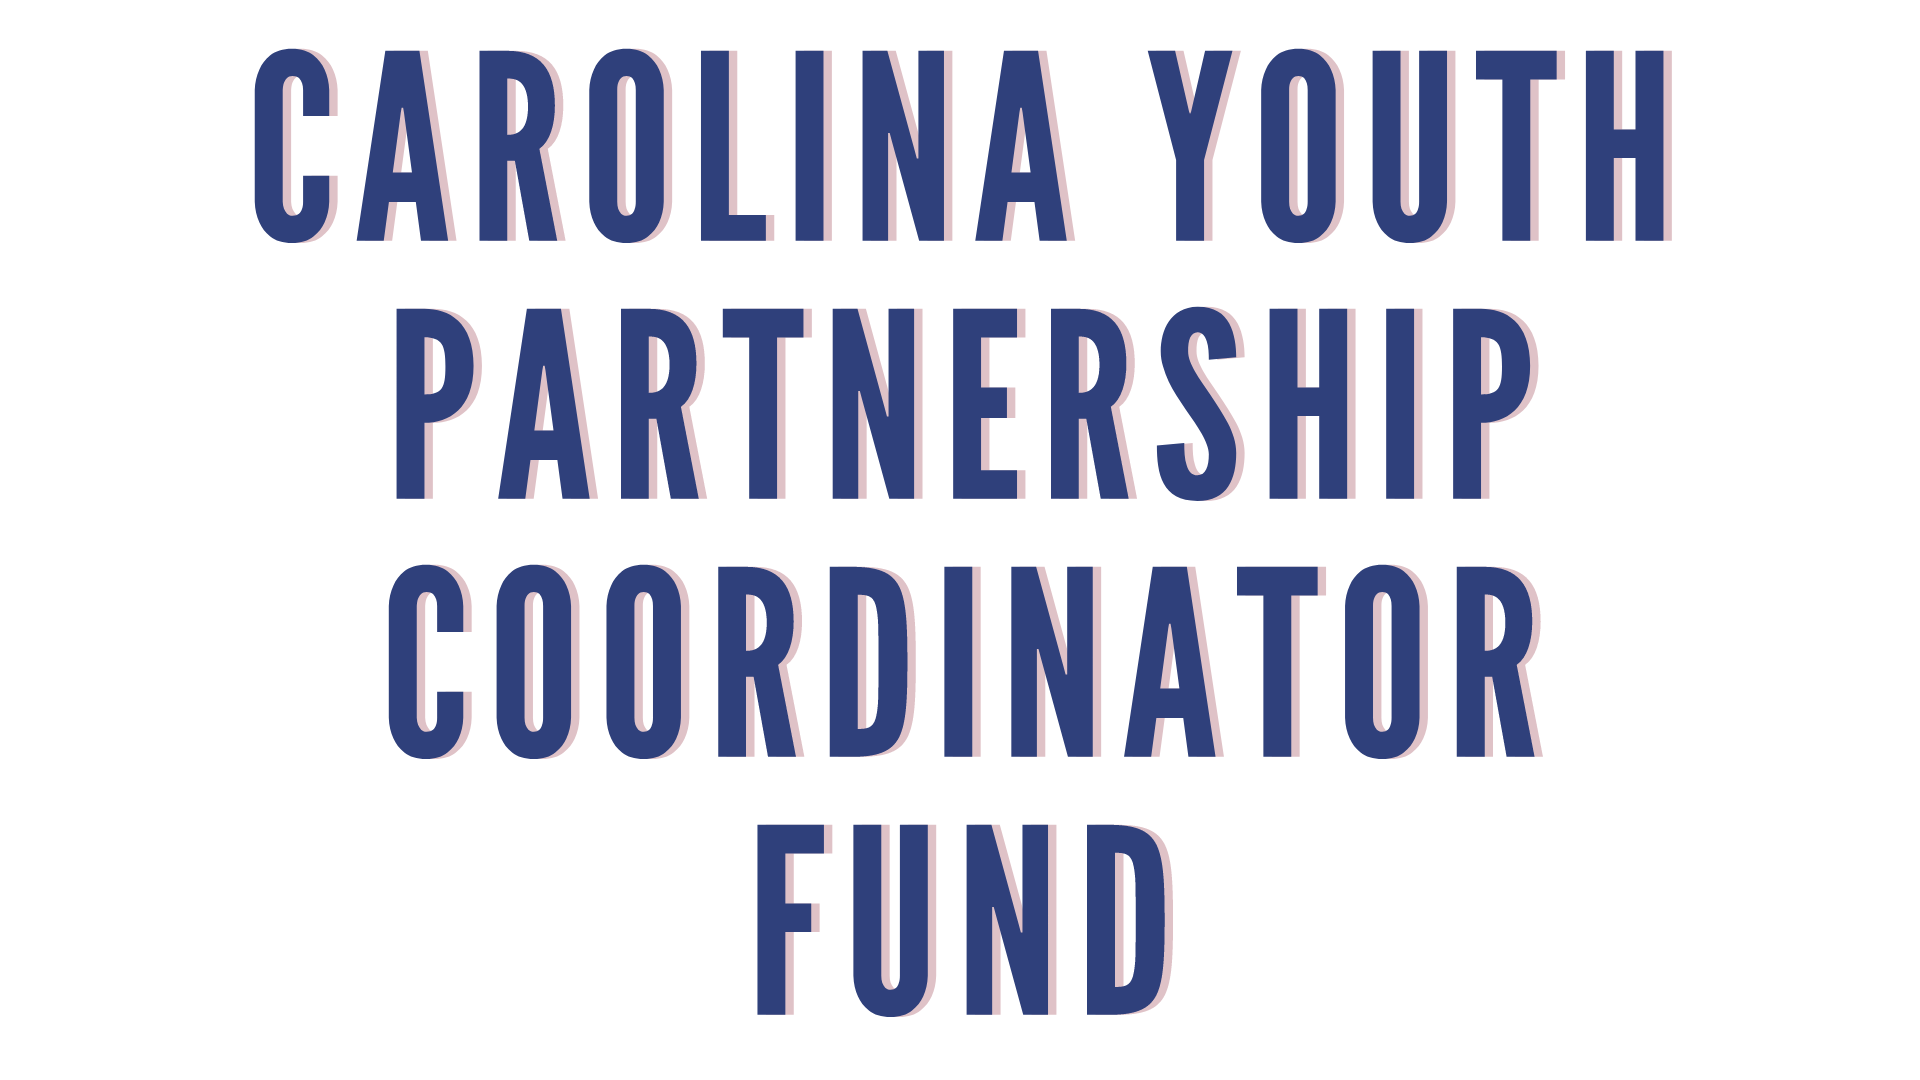 Carolina Youth Partnership Coordinator Fund